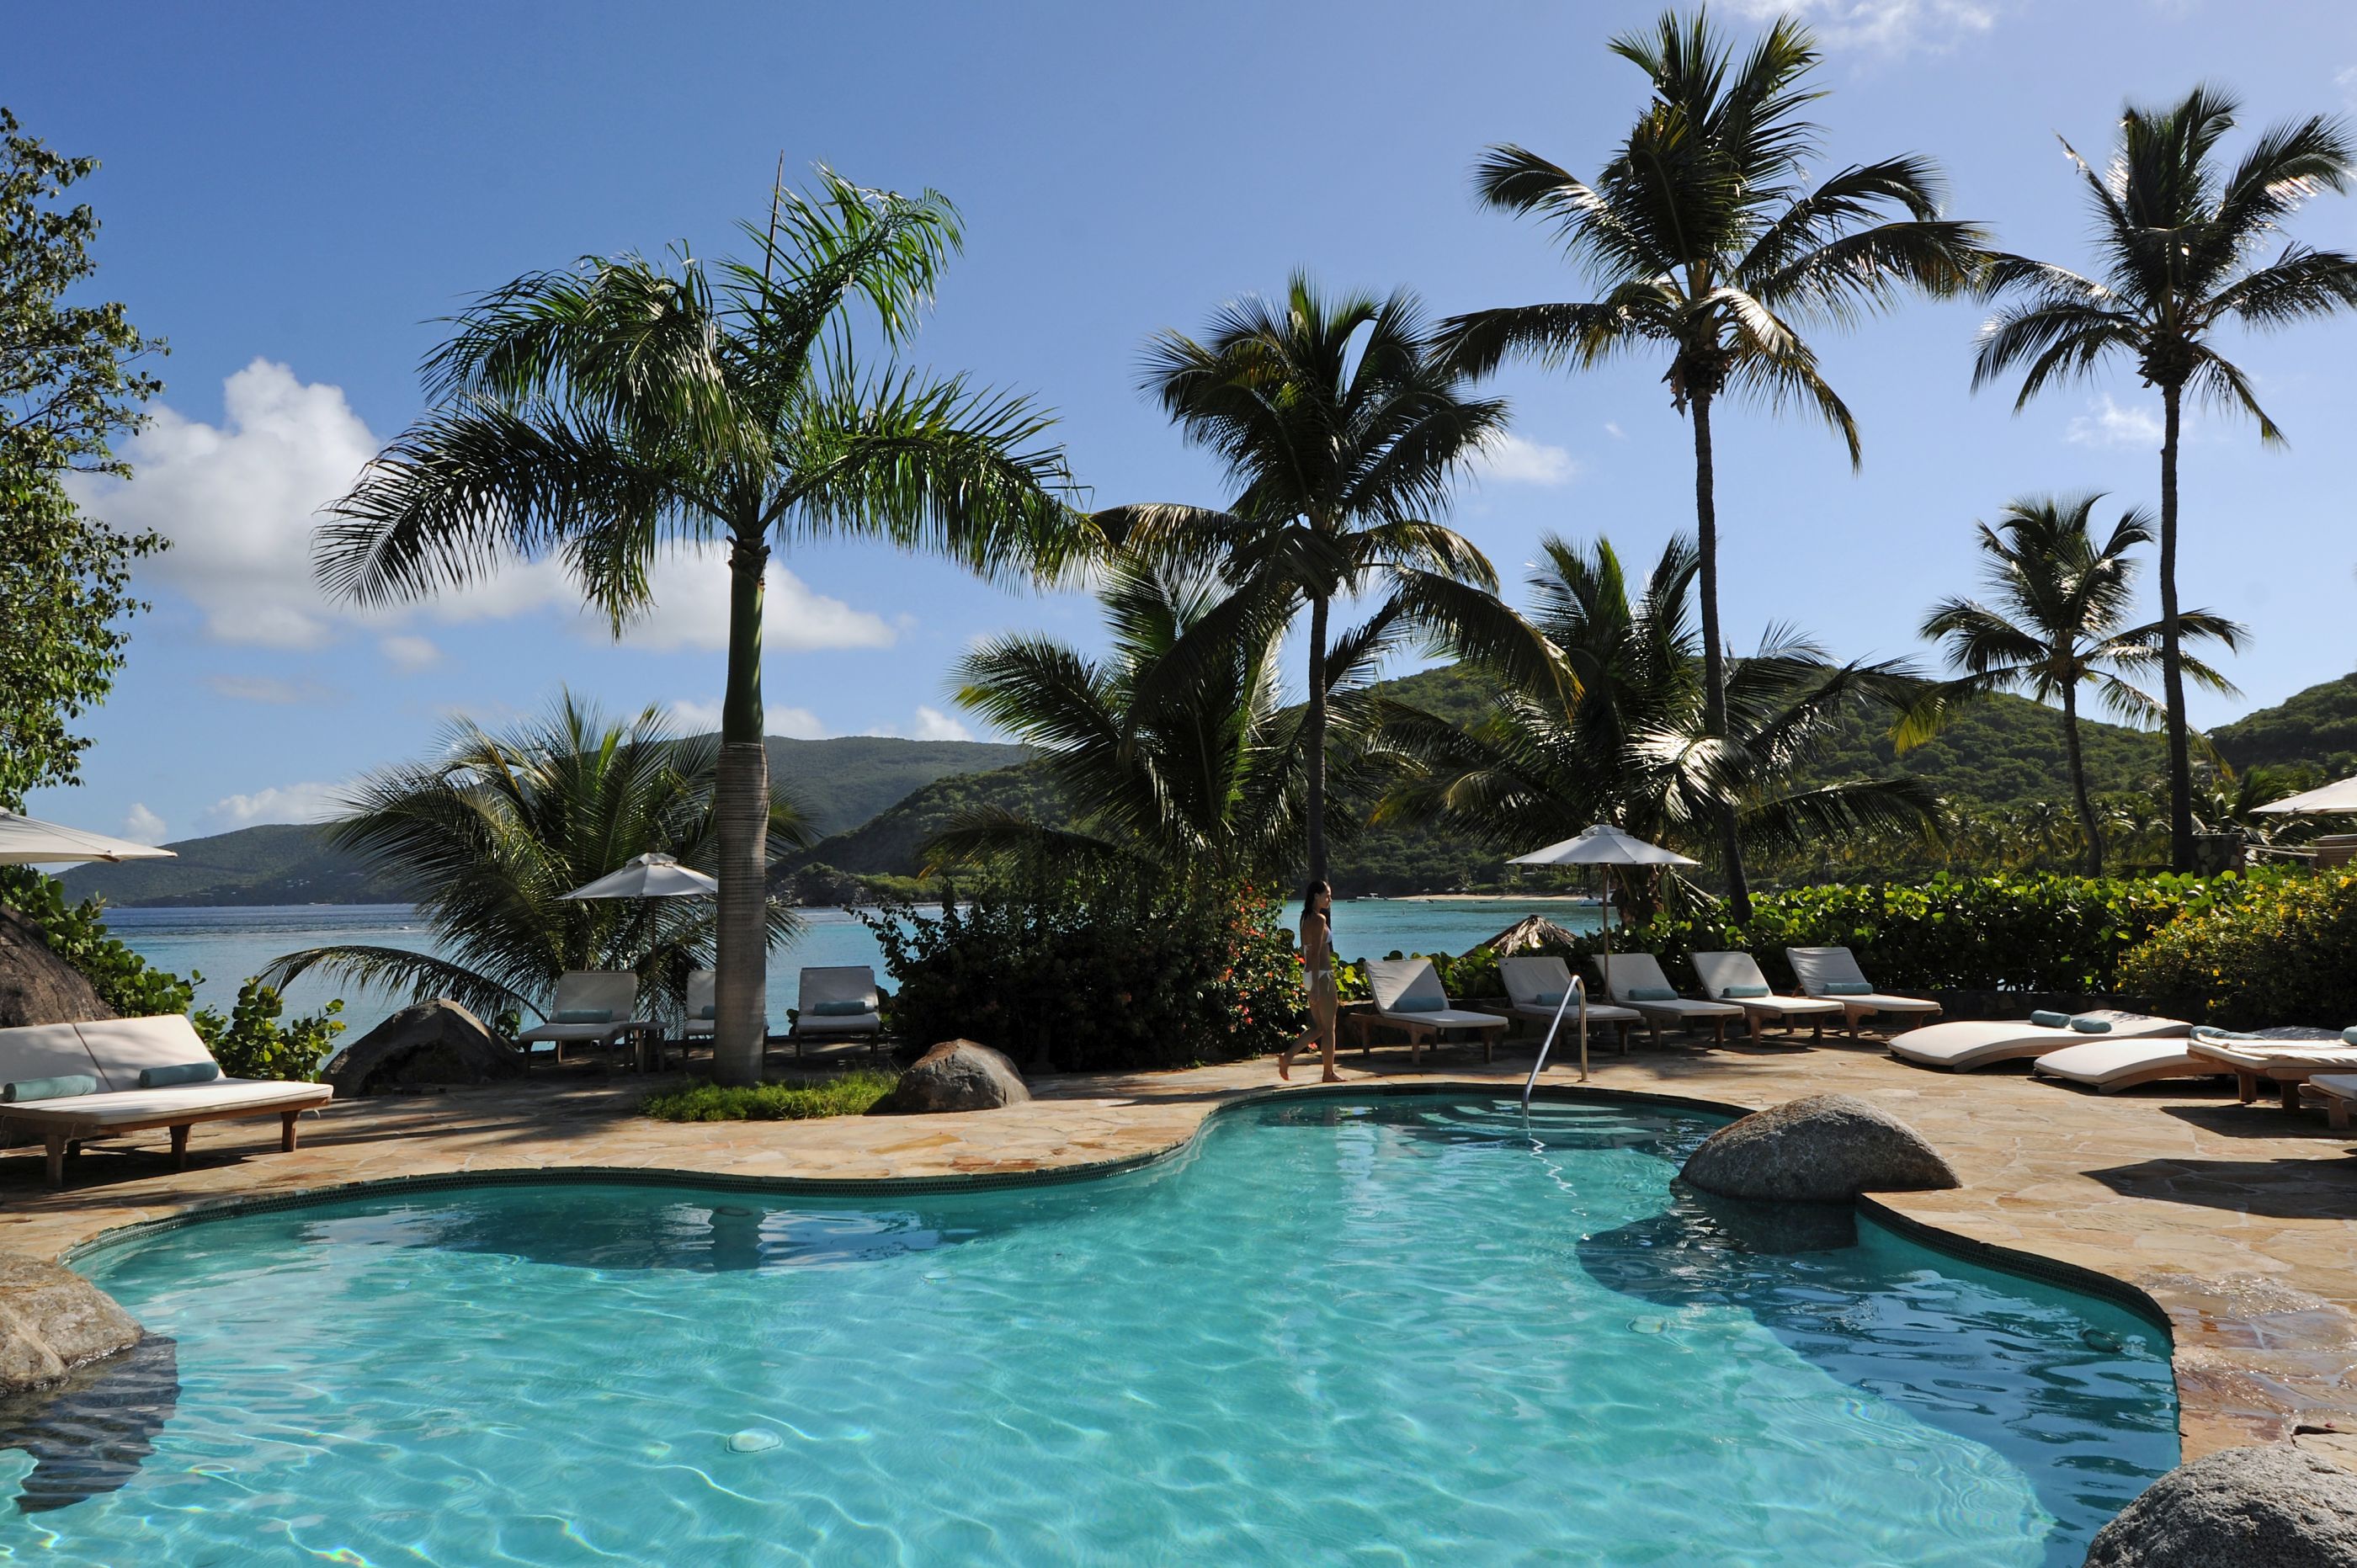 Main pool of Rosewood Little Dix Bay, British Virgin Islands